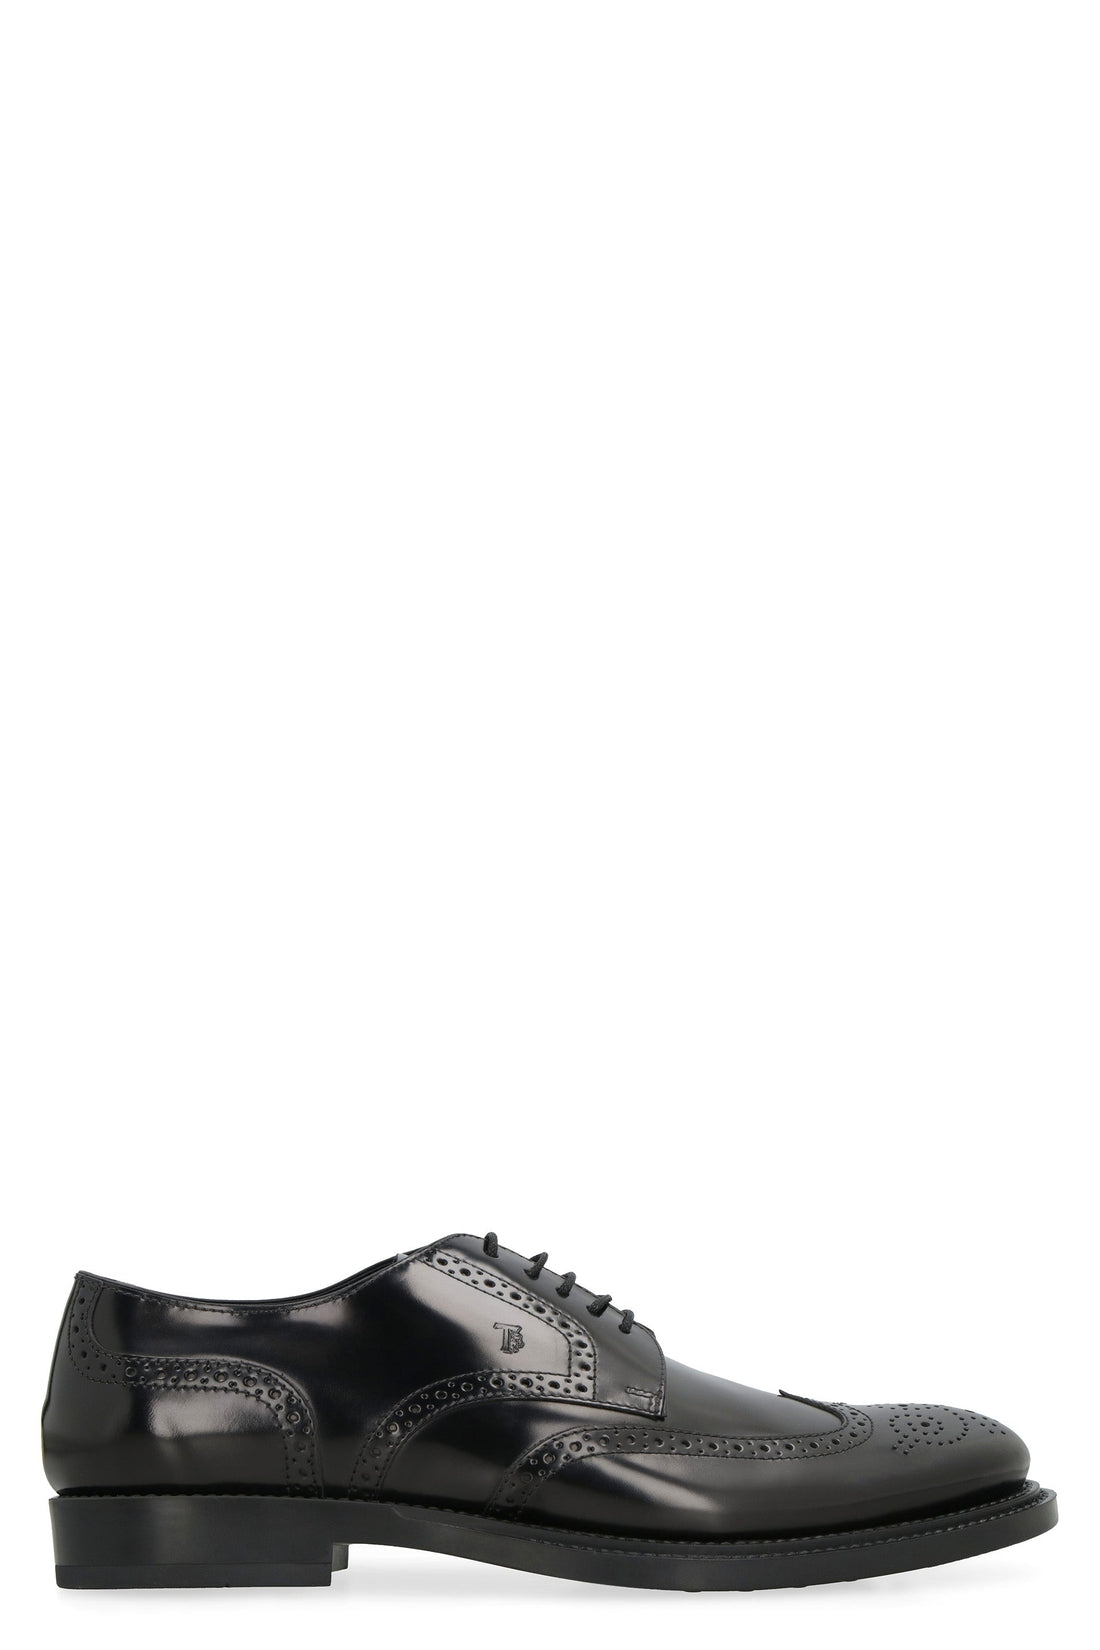 Tod's-OUTLET-SALE-Derby leather lace-up shoes-ARCHIVIST